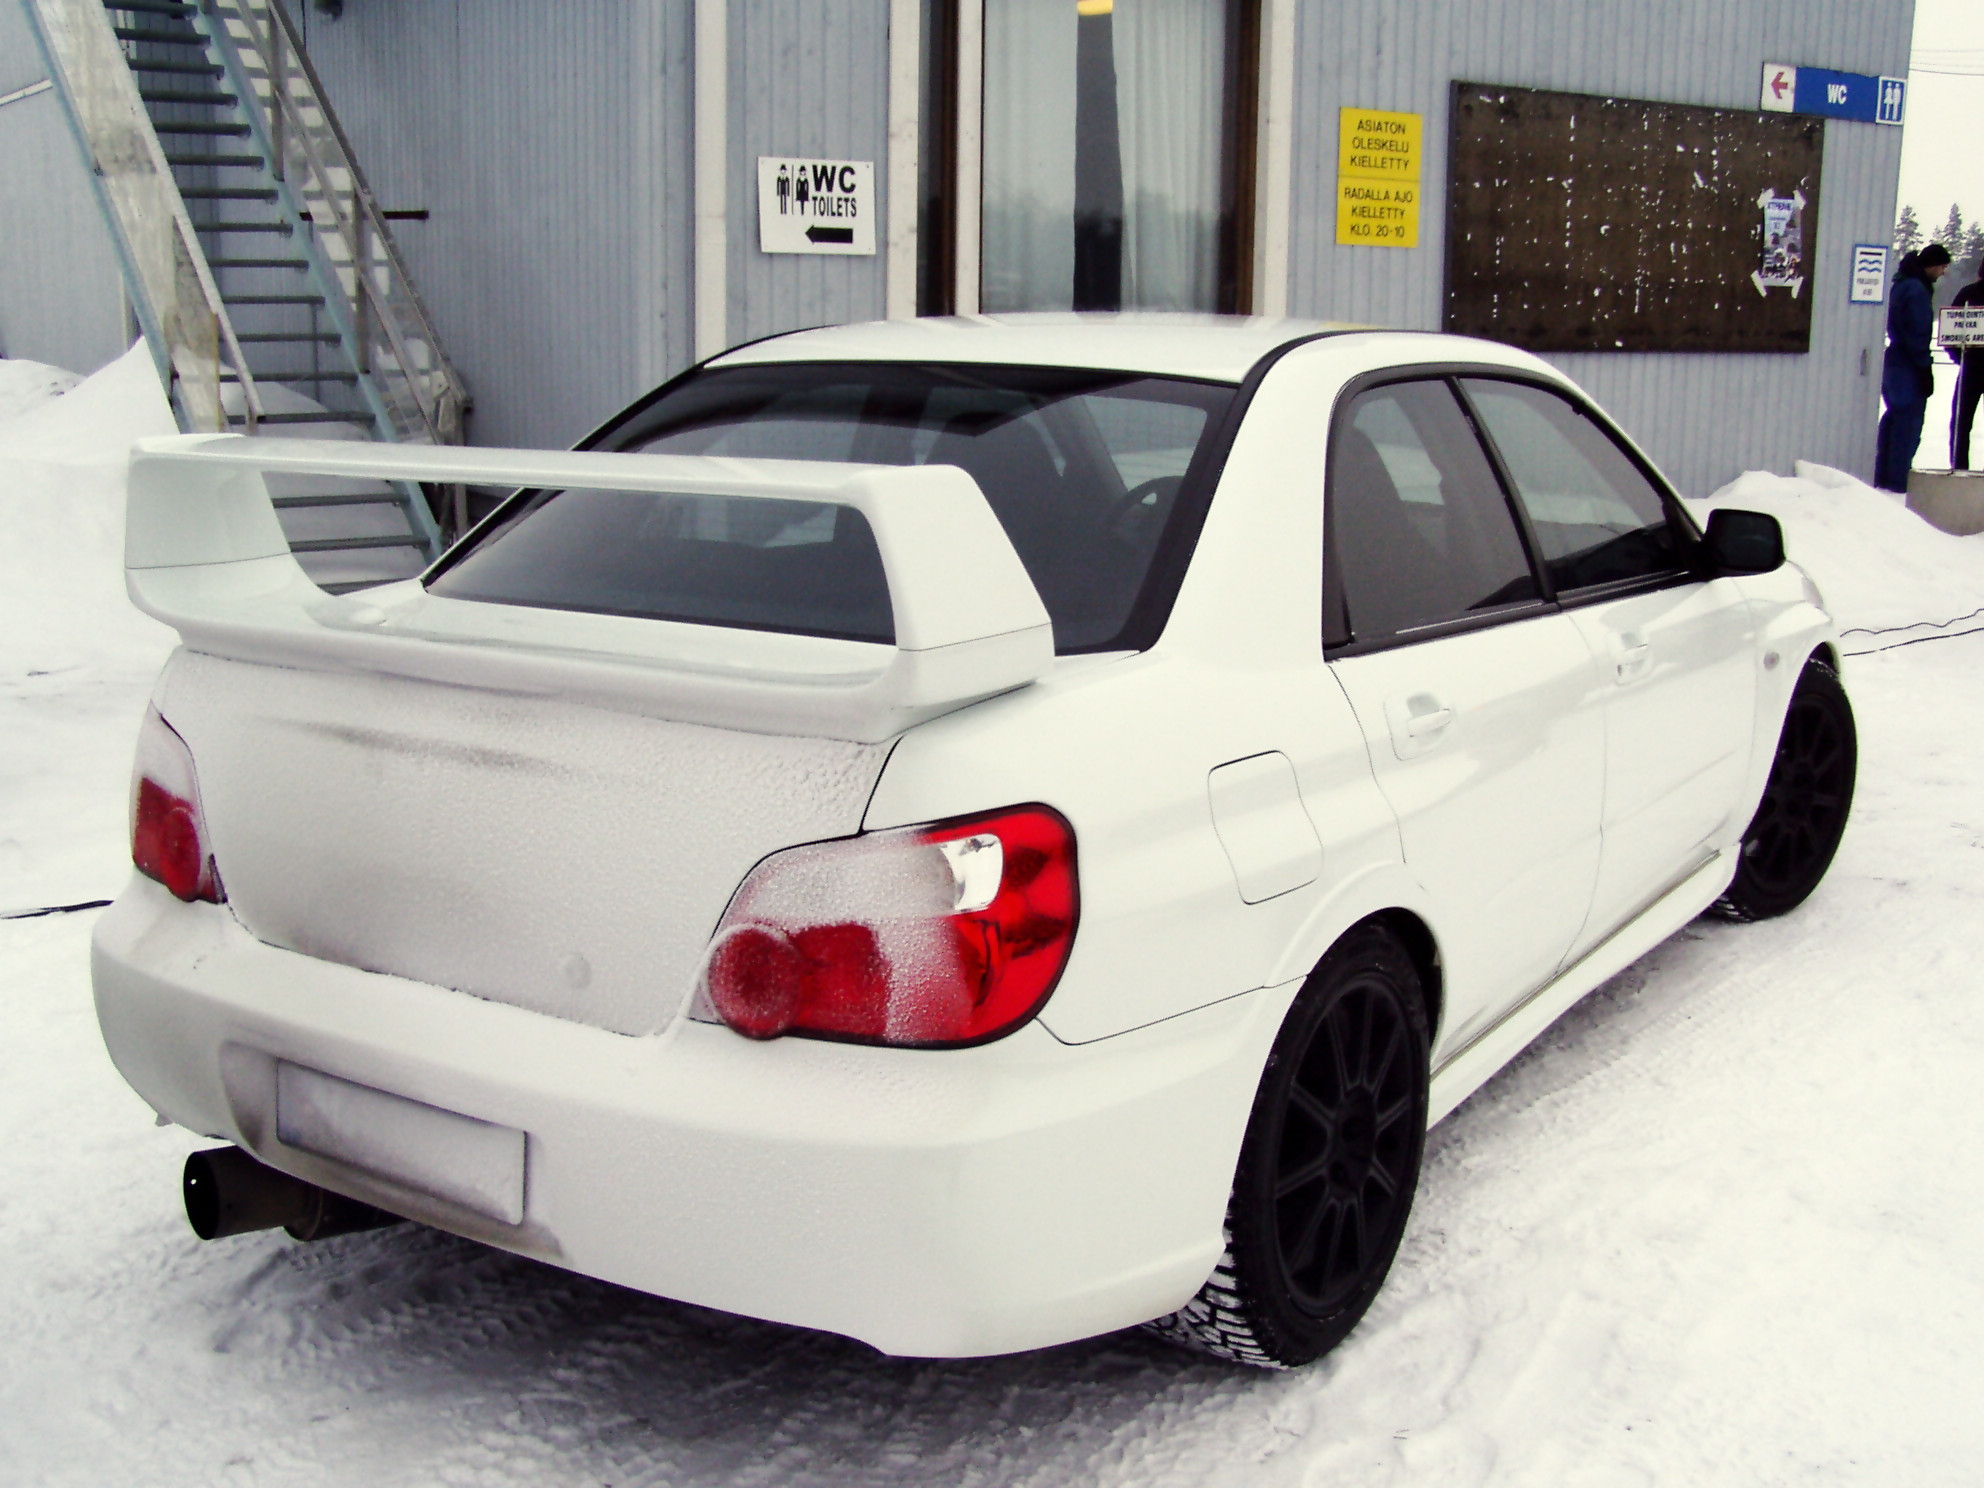 X-Treme on ice 18.2.2006, Subaru Impreza